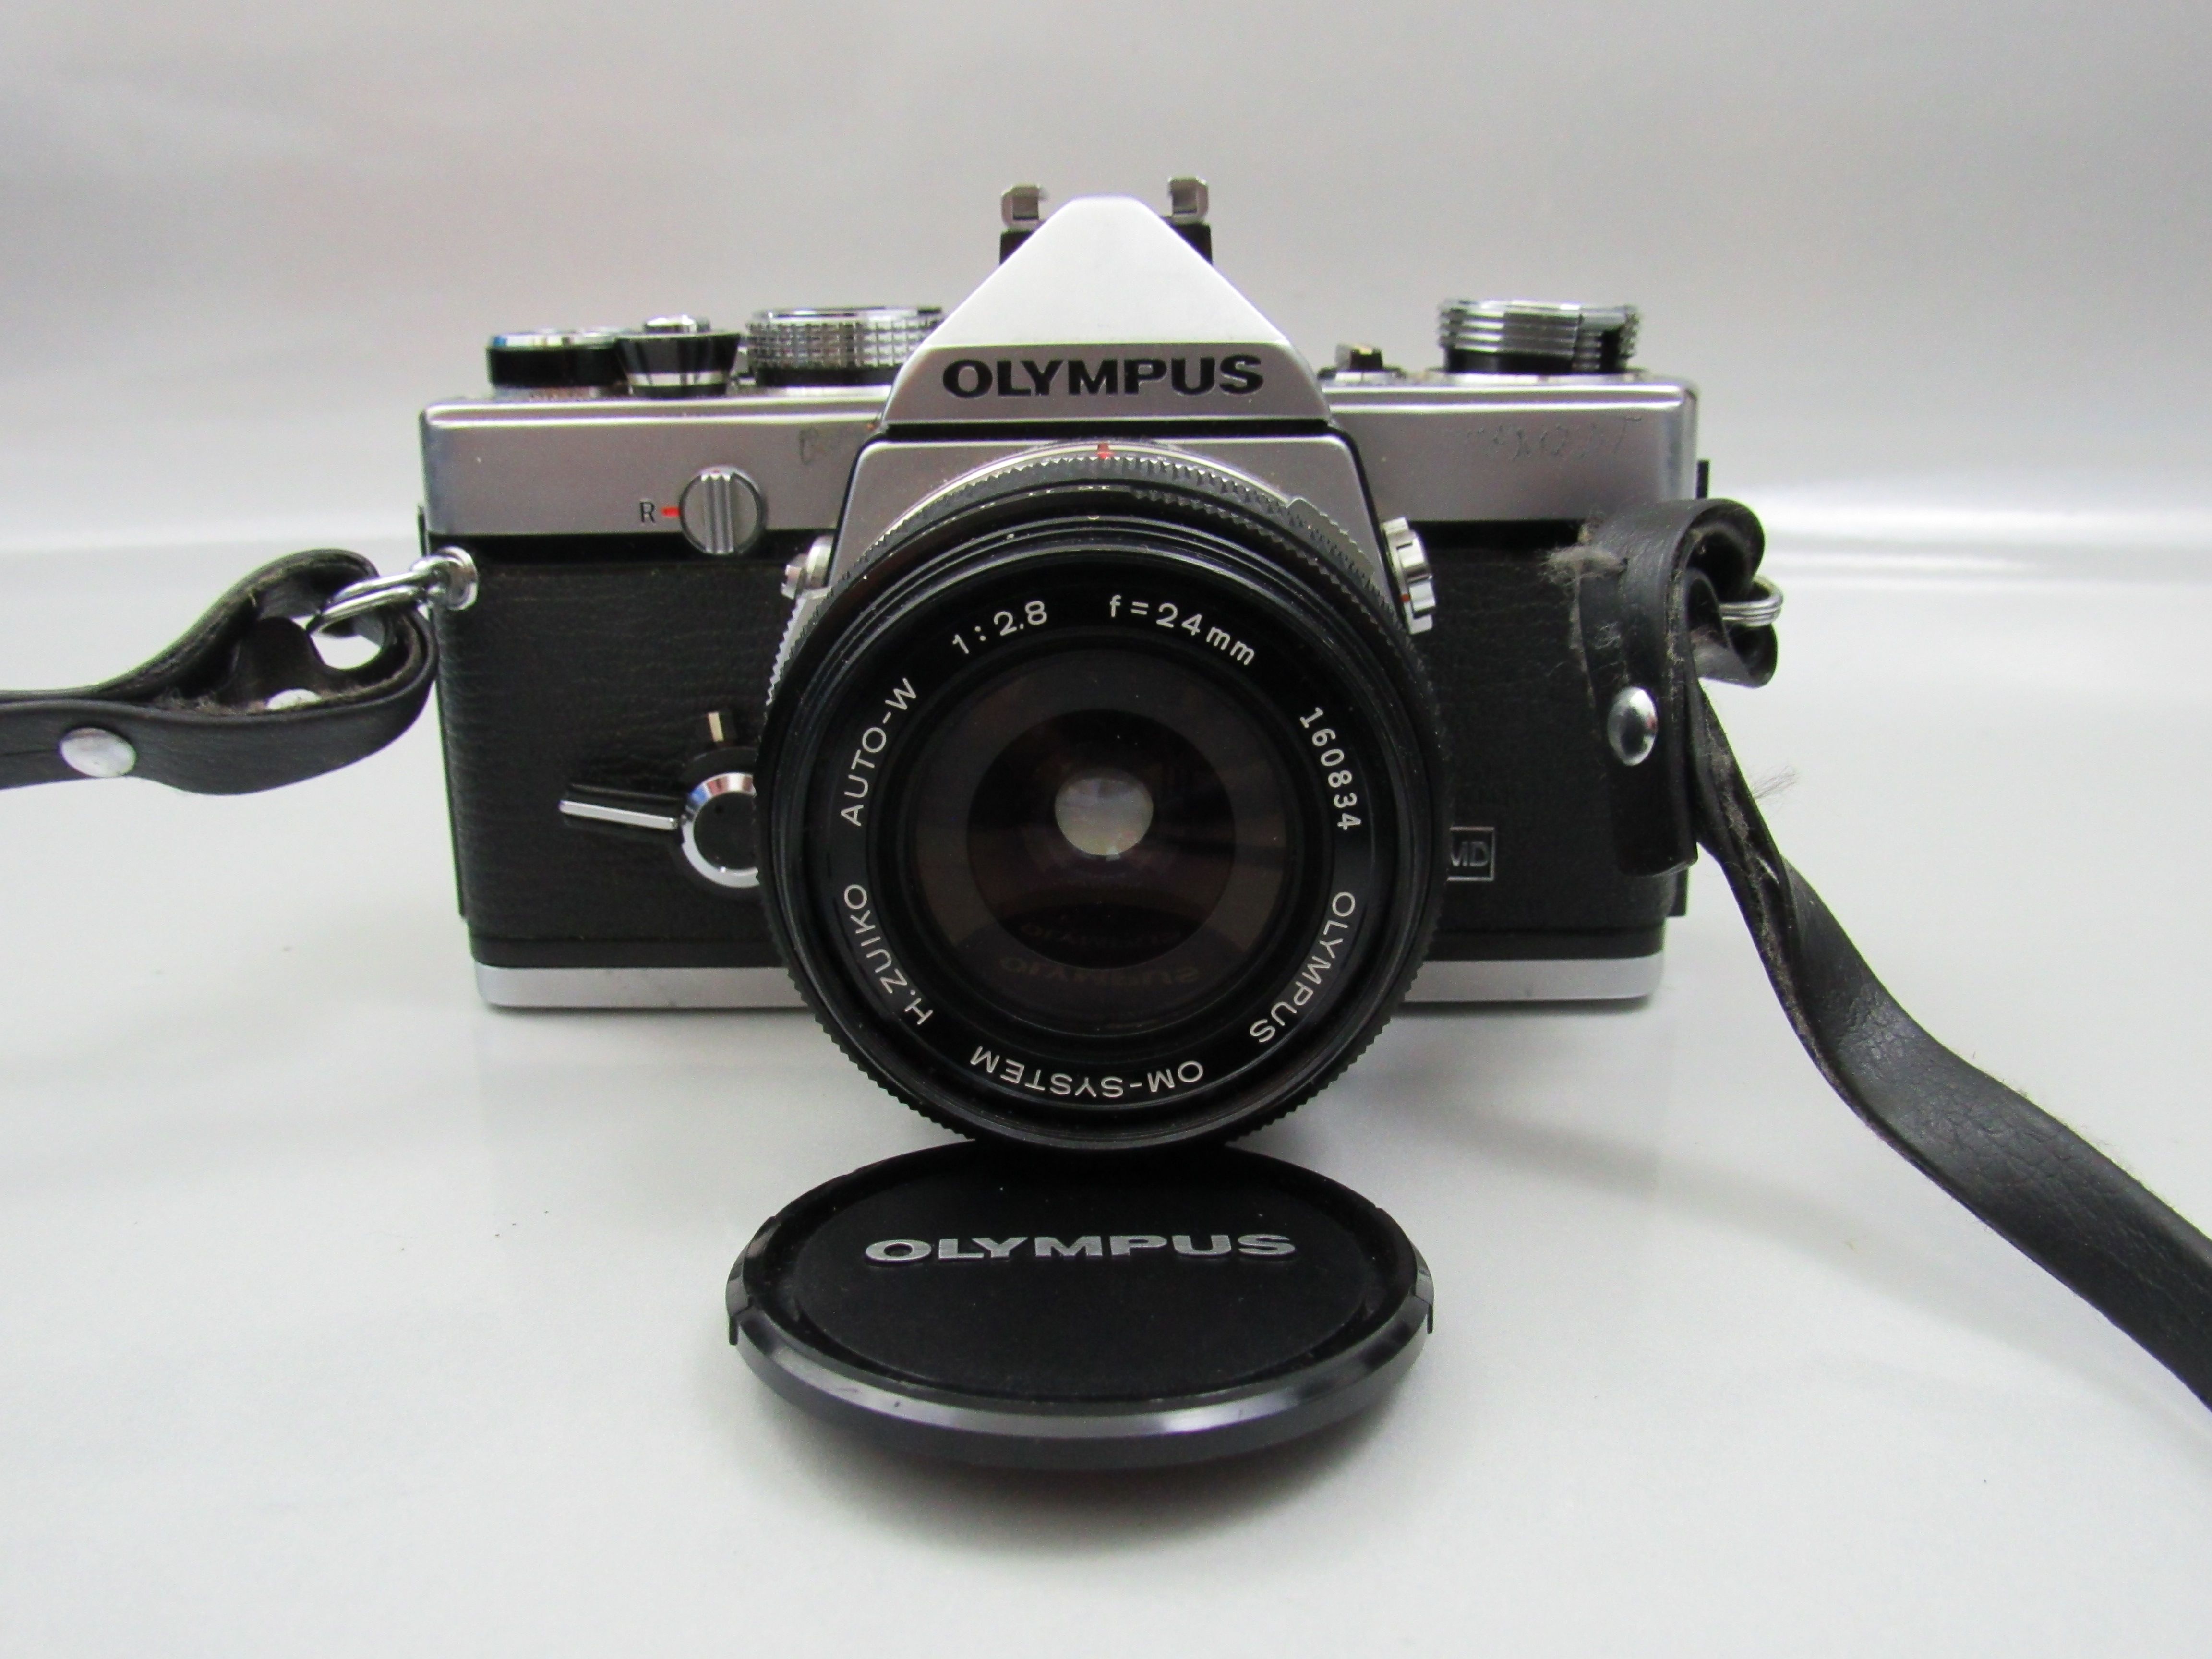 Olympus OM-1 35mm SLR Film Camera w/ Case, Lens and Manual